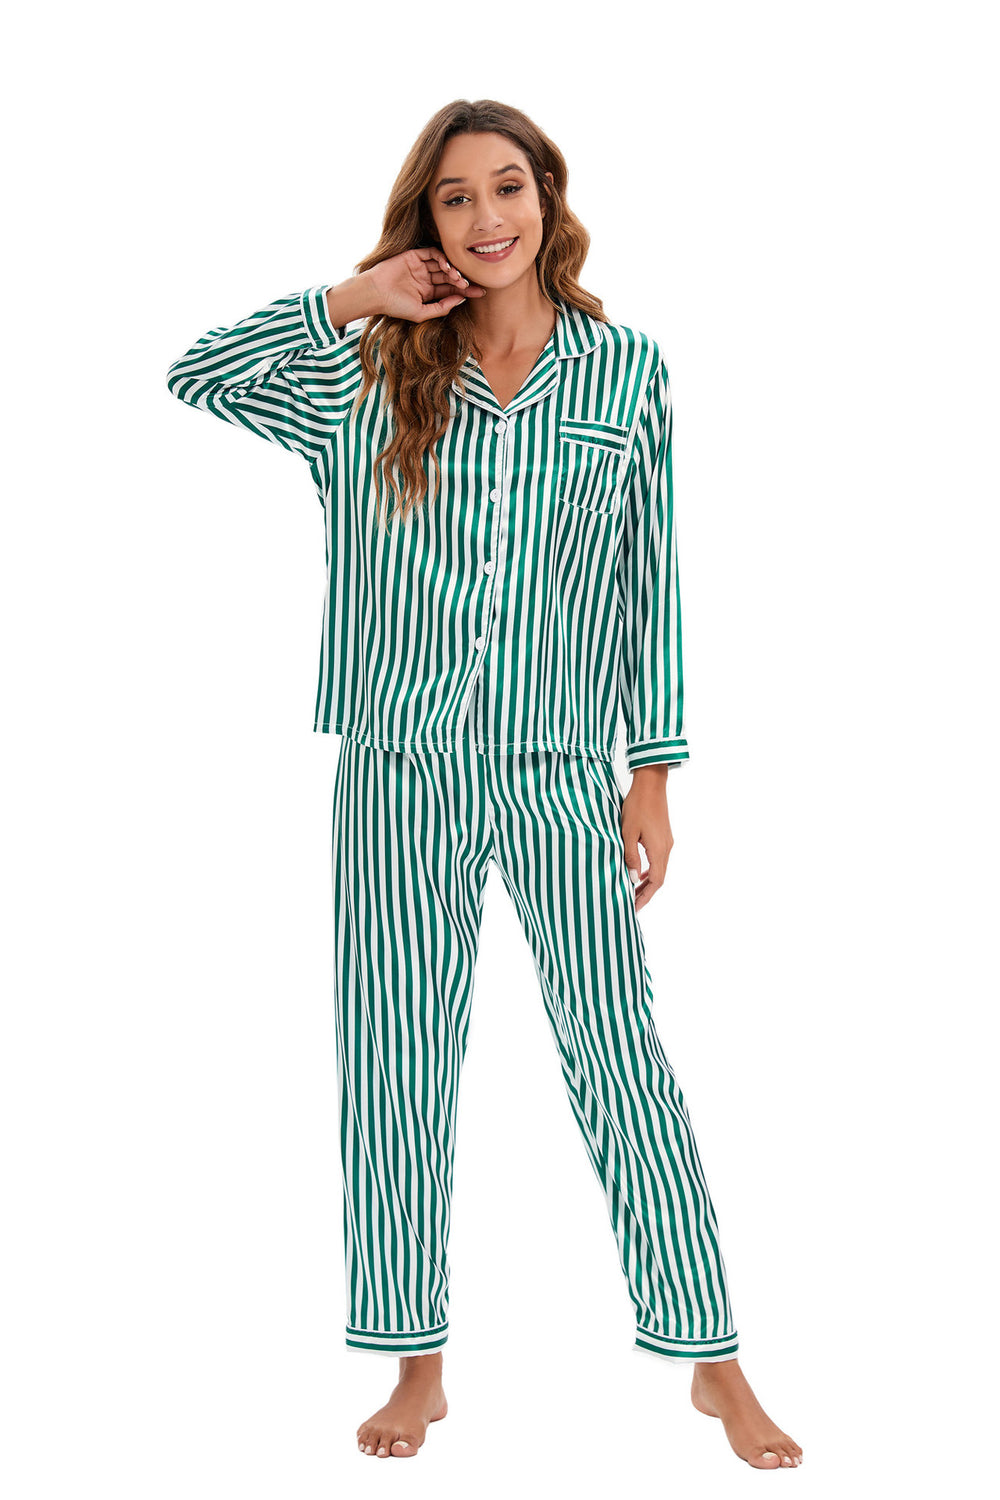 Satin Long Sleeved Trousers Home Wear Cardigan Suit Pajamas Women